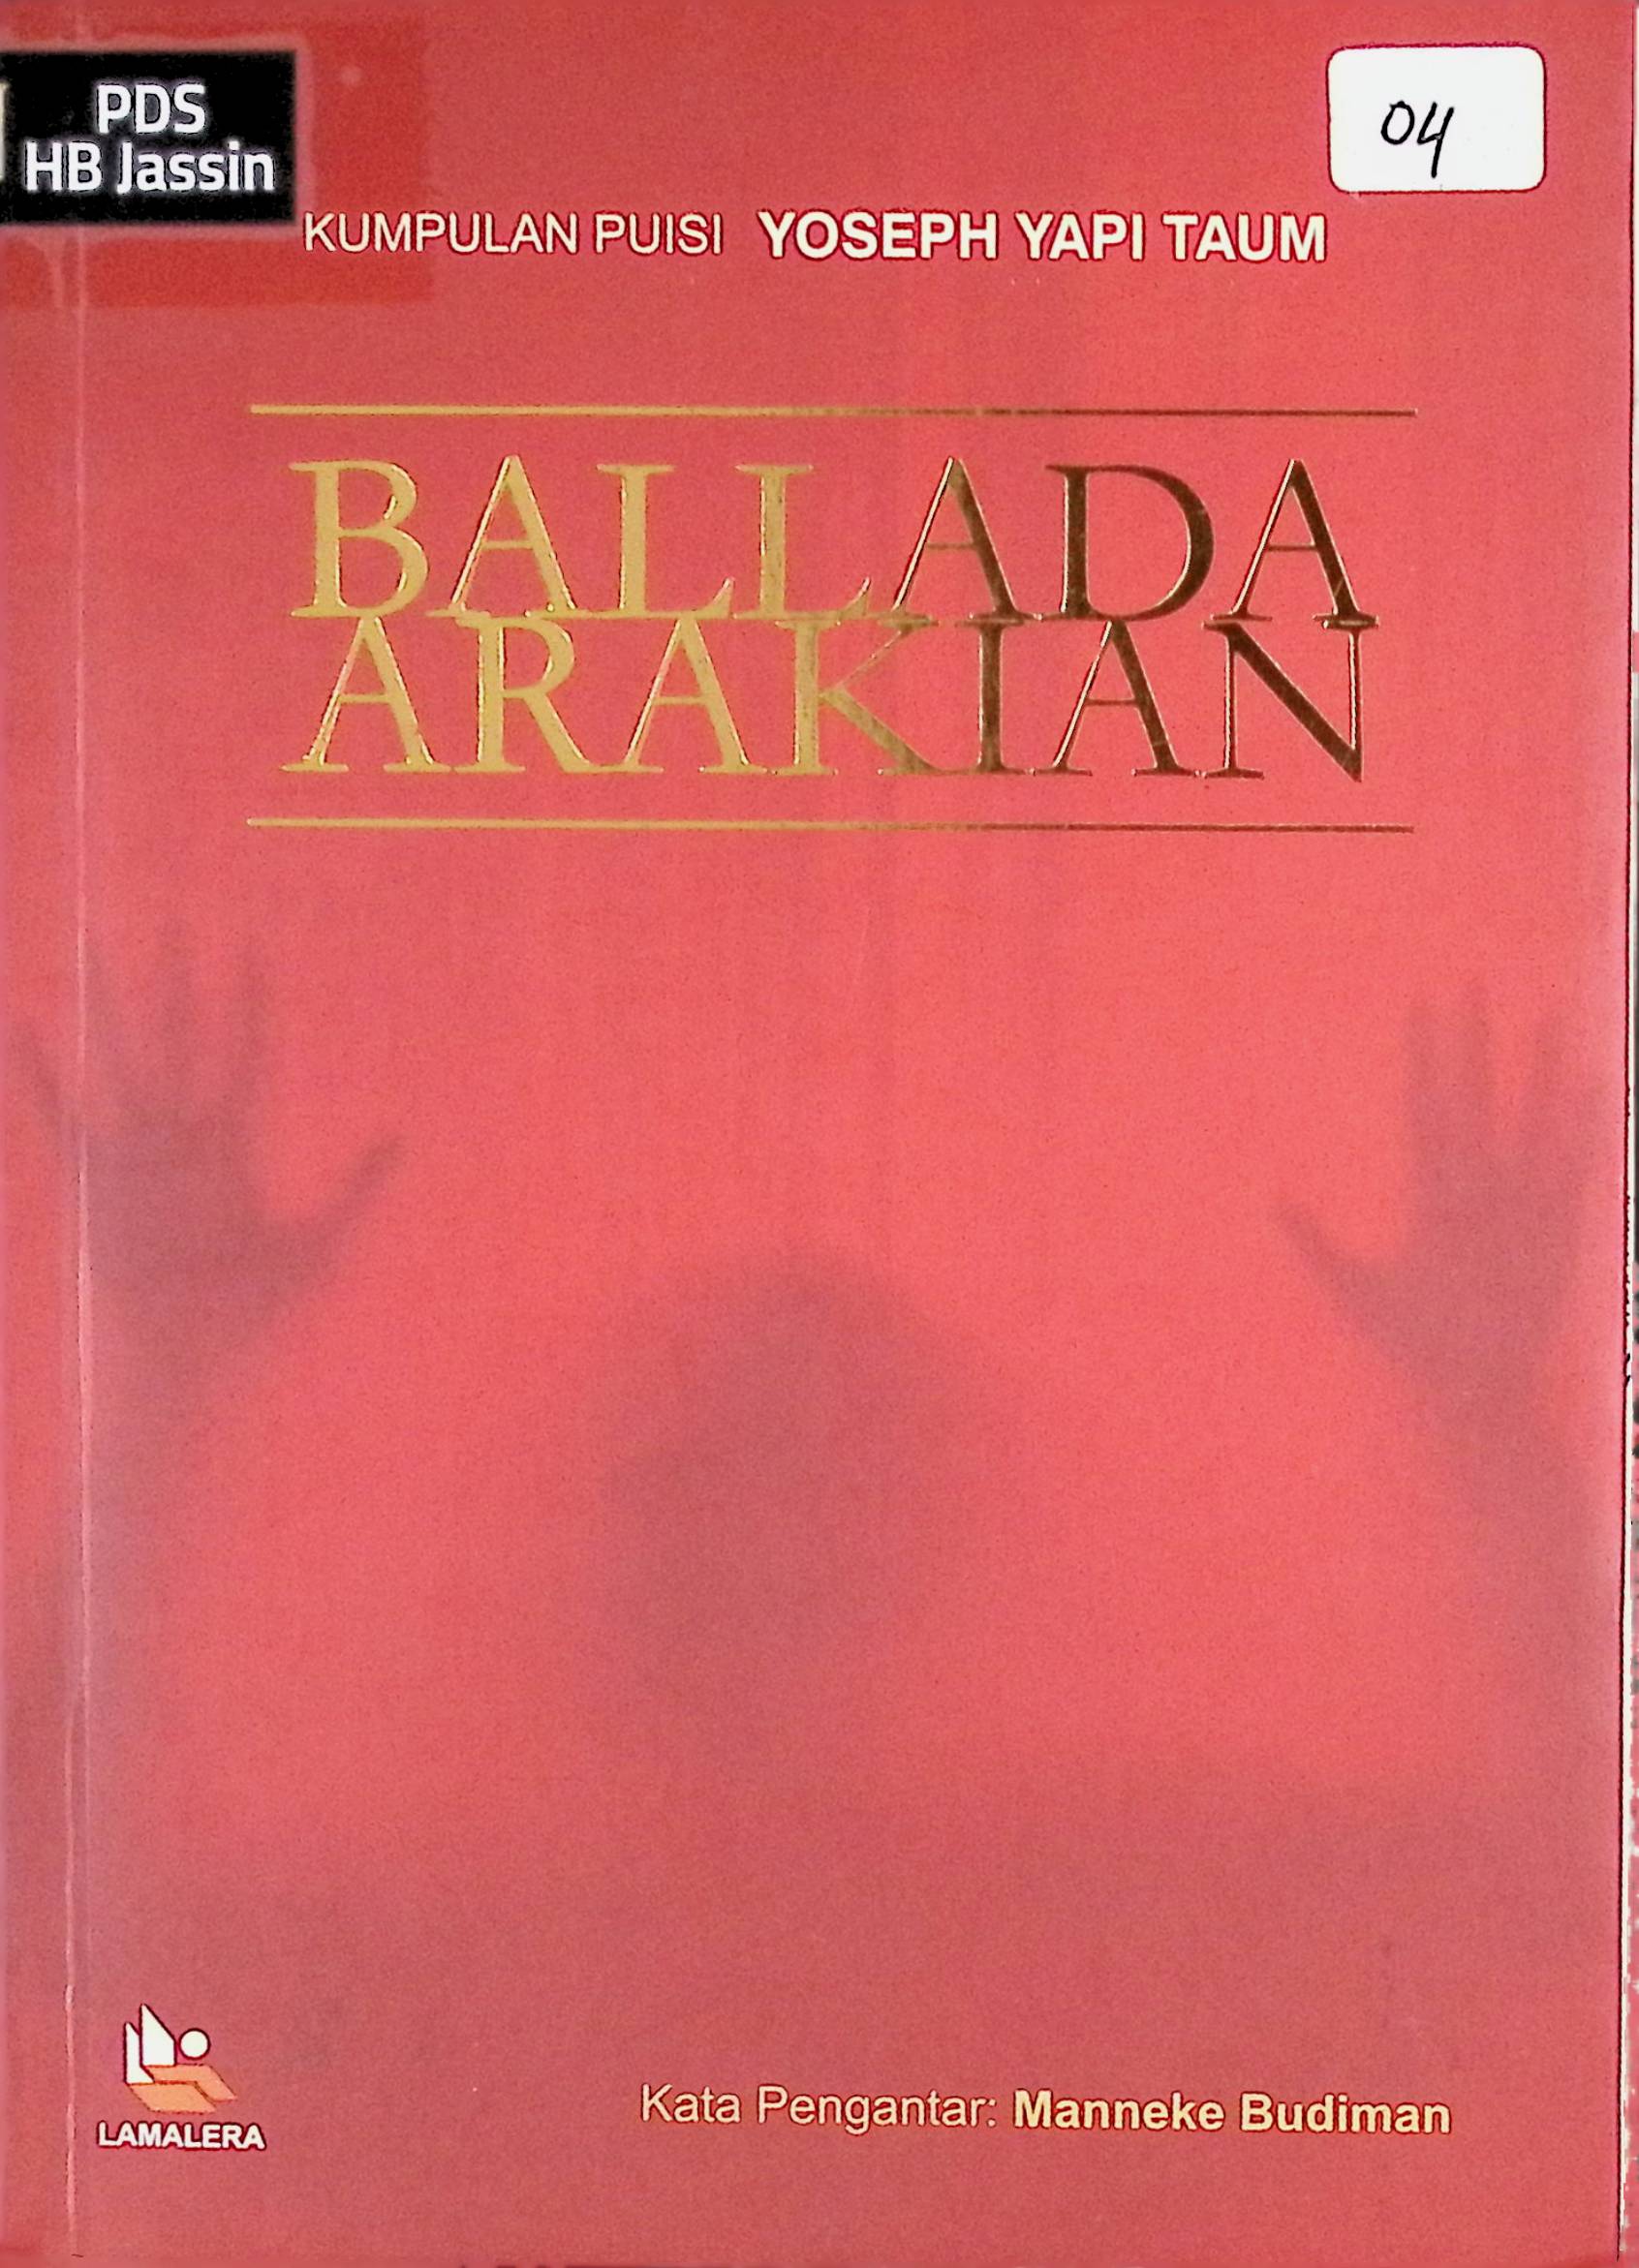 Ballada Arakian